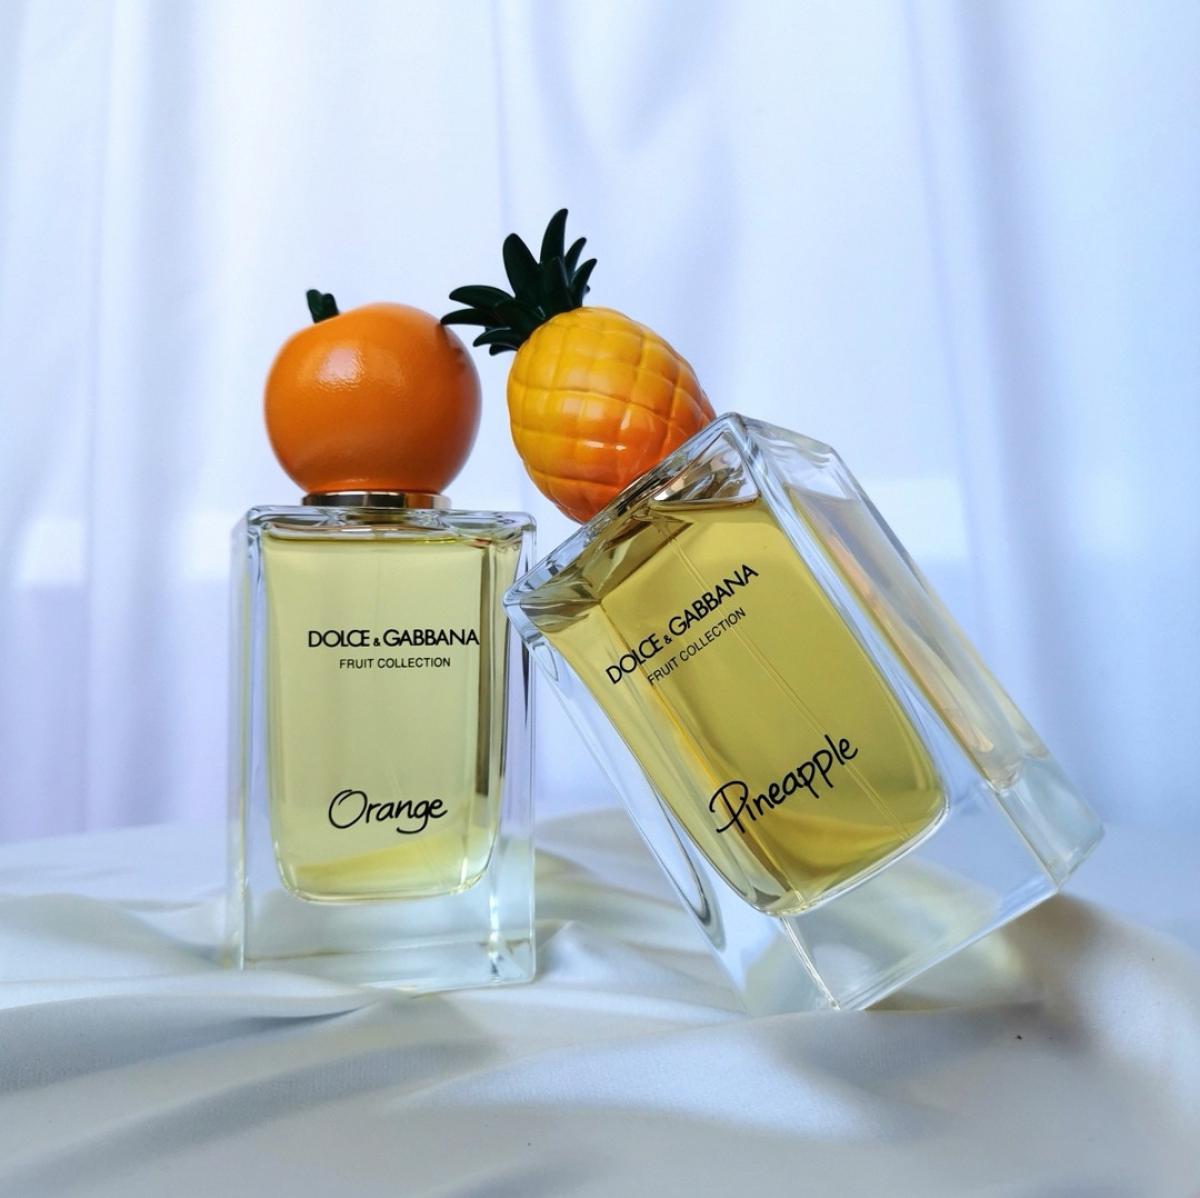 Orange Dolce&Gabbana perfume - a fragrance for women and men 2020